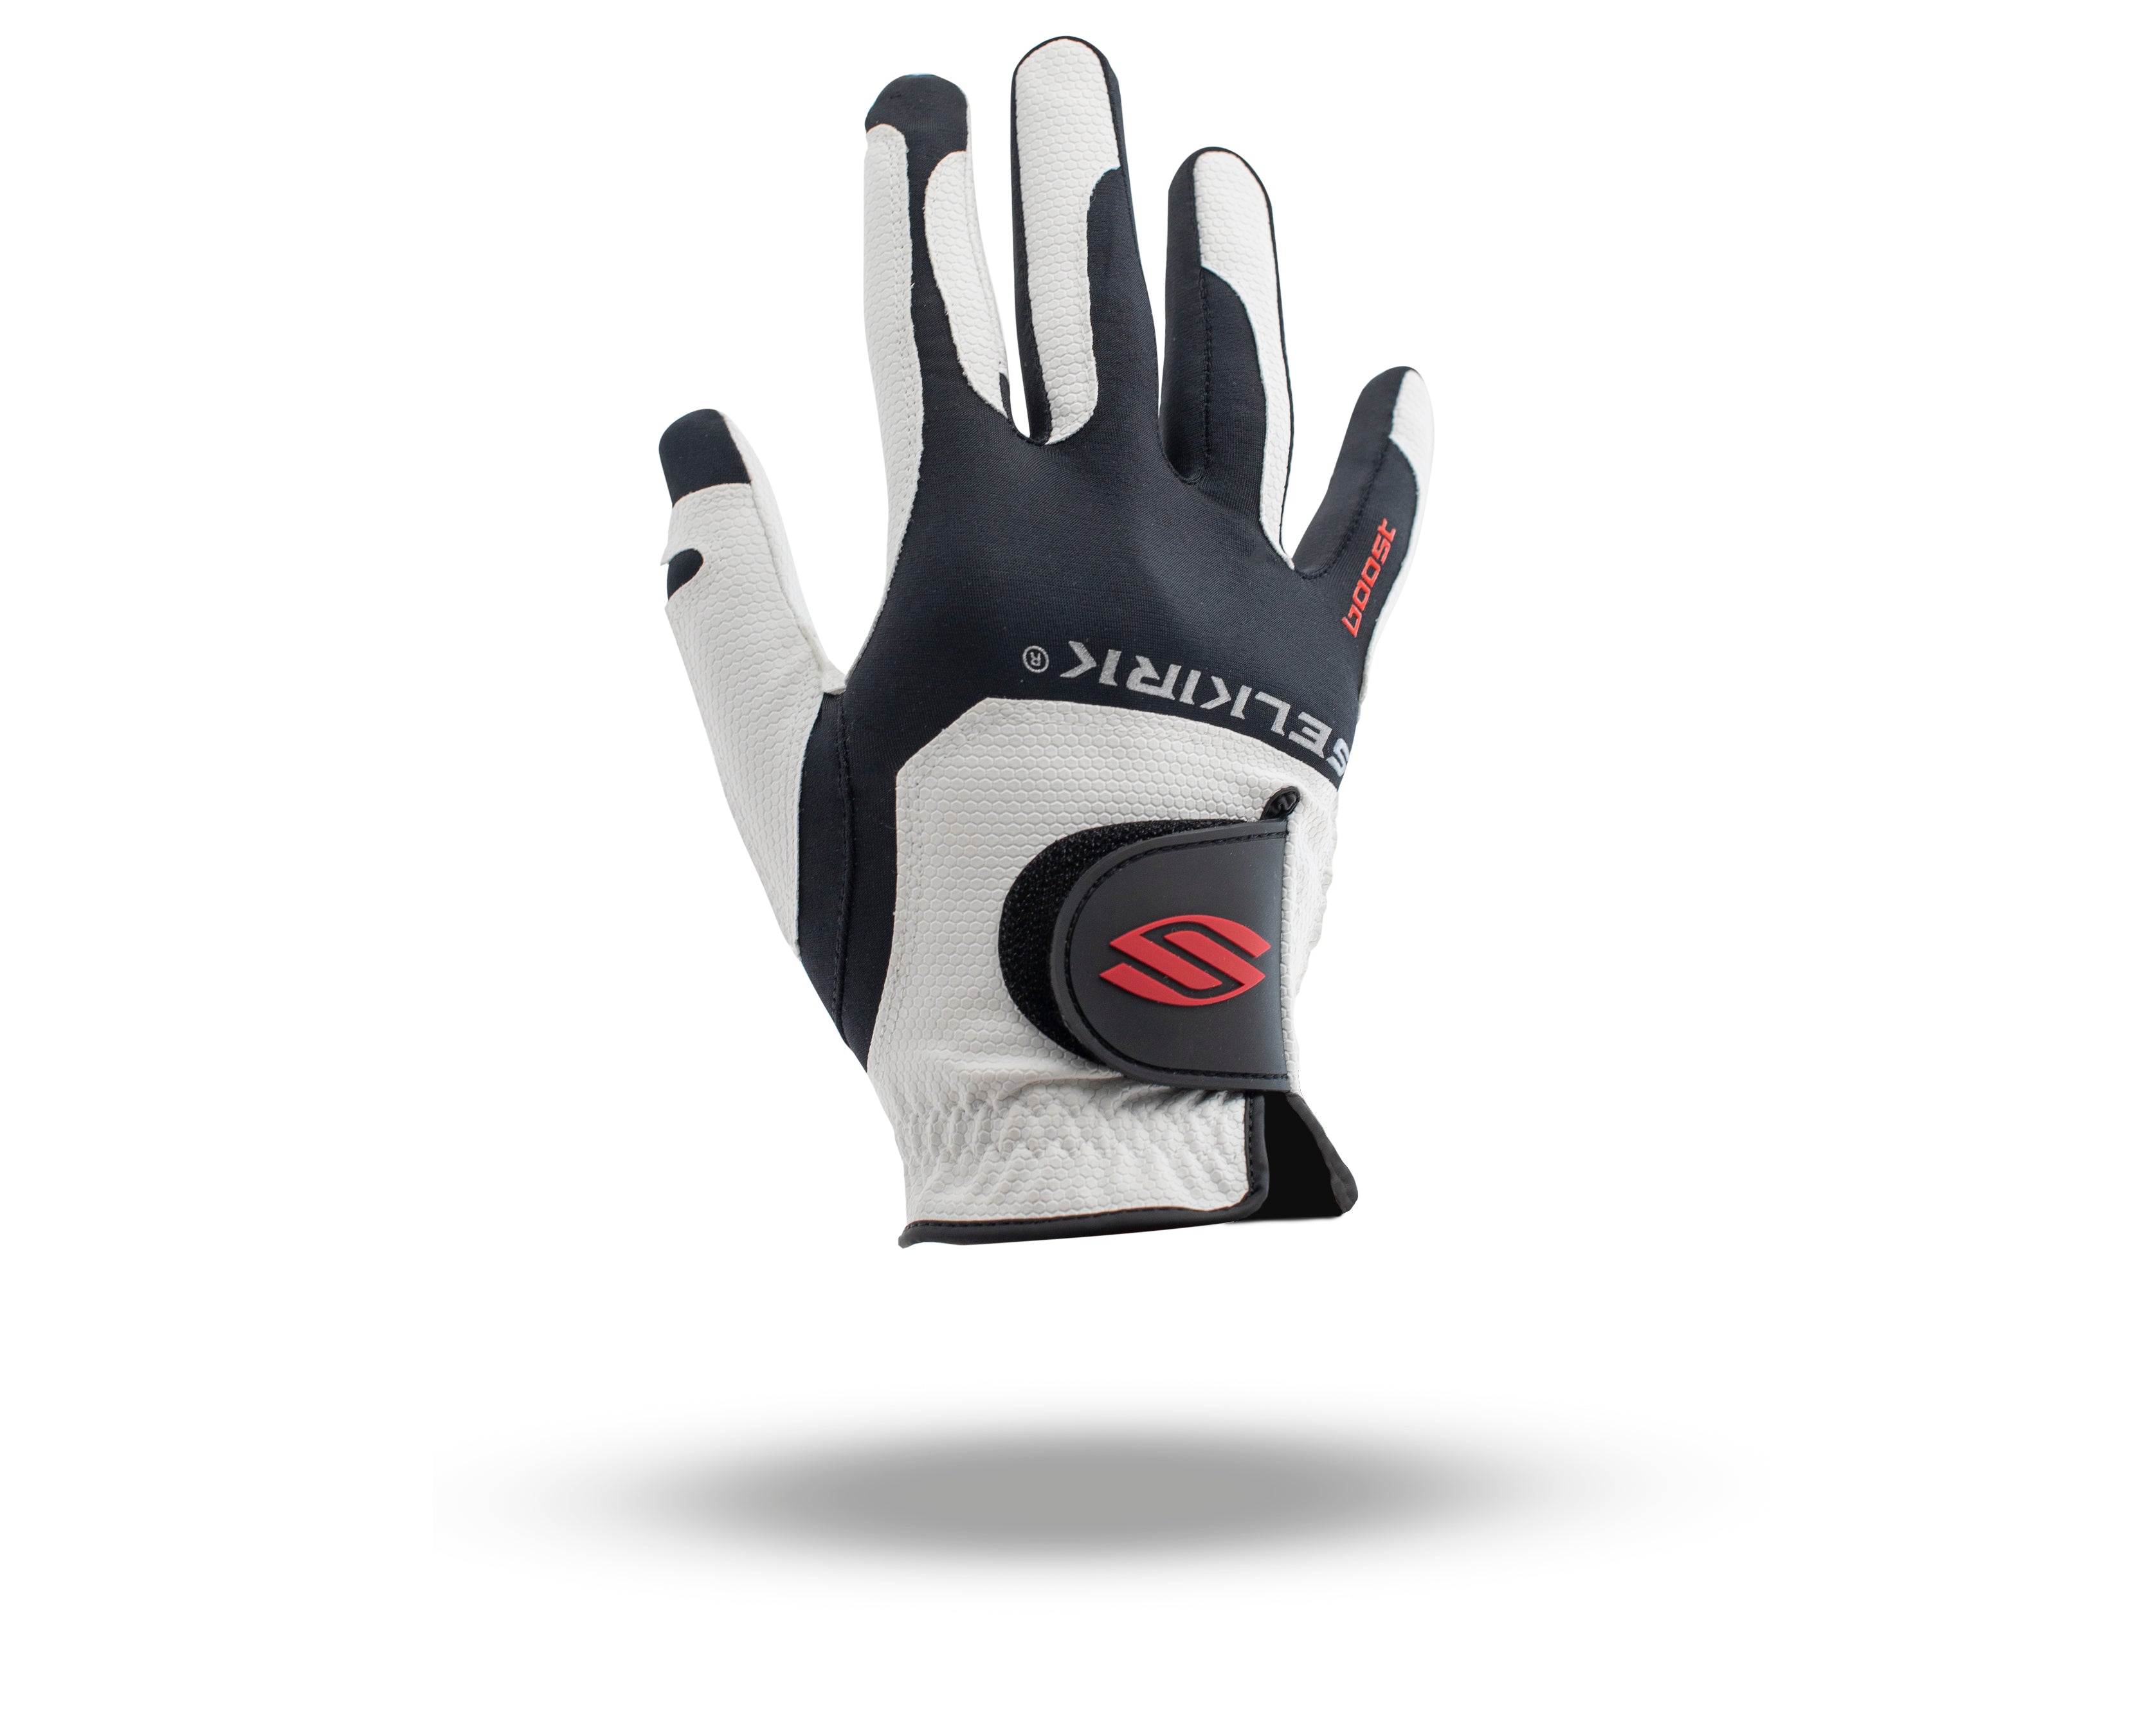 Selkirk Sport Pickleball Boost Glove, black and white.